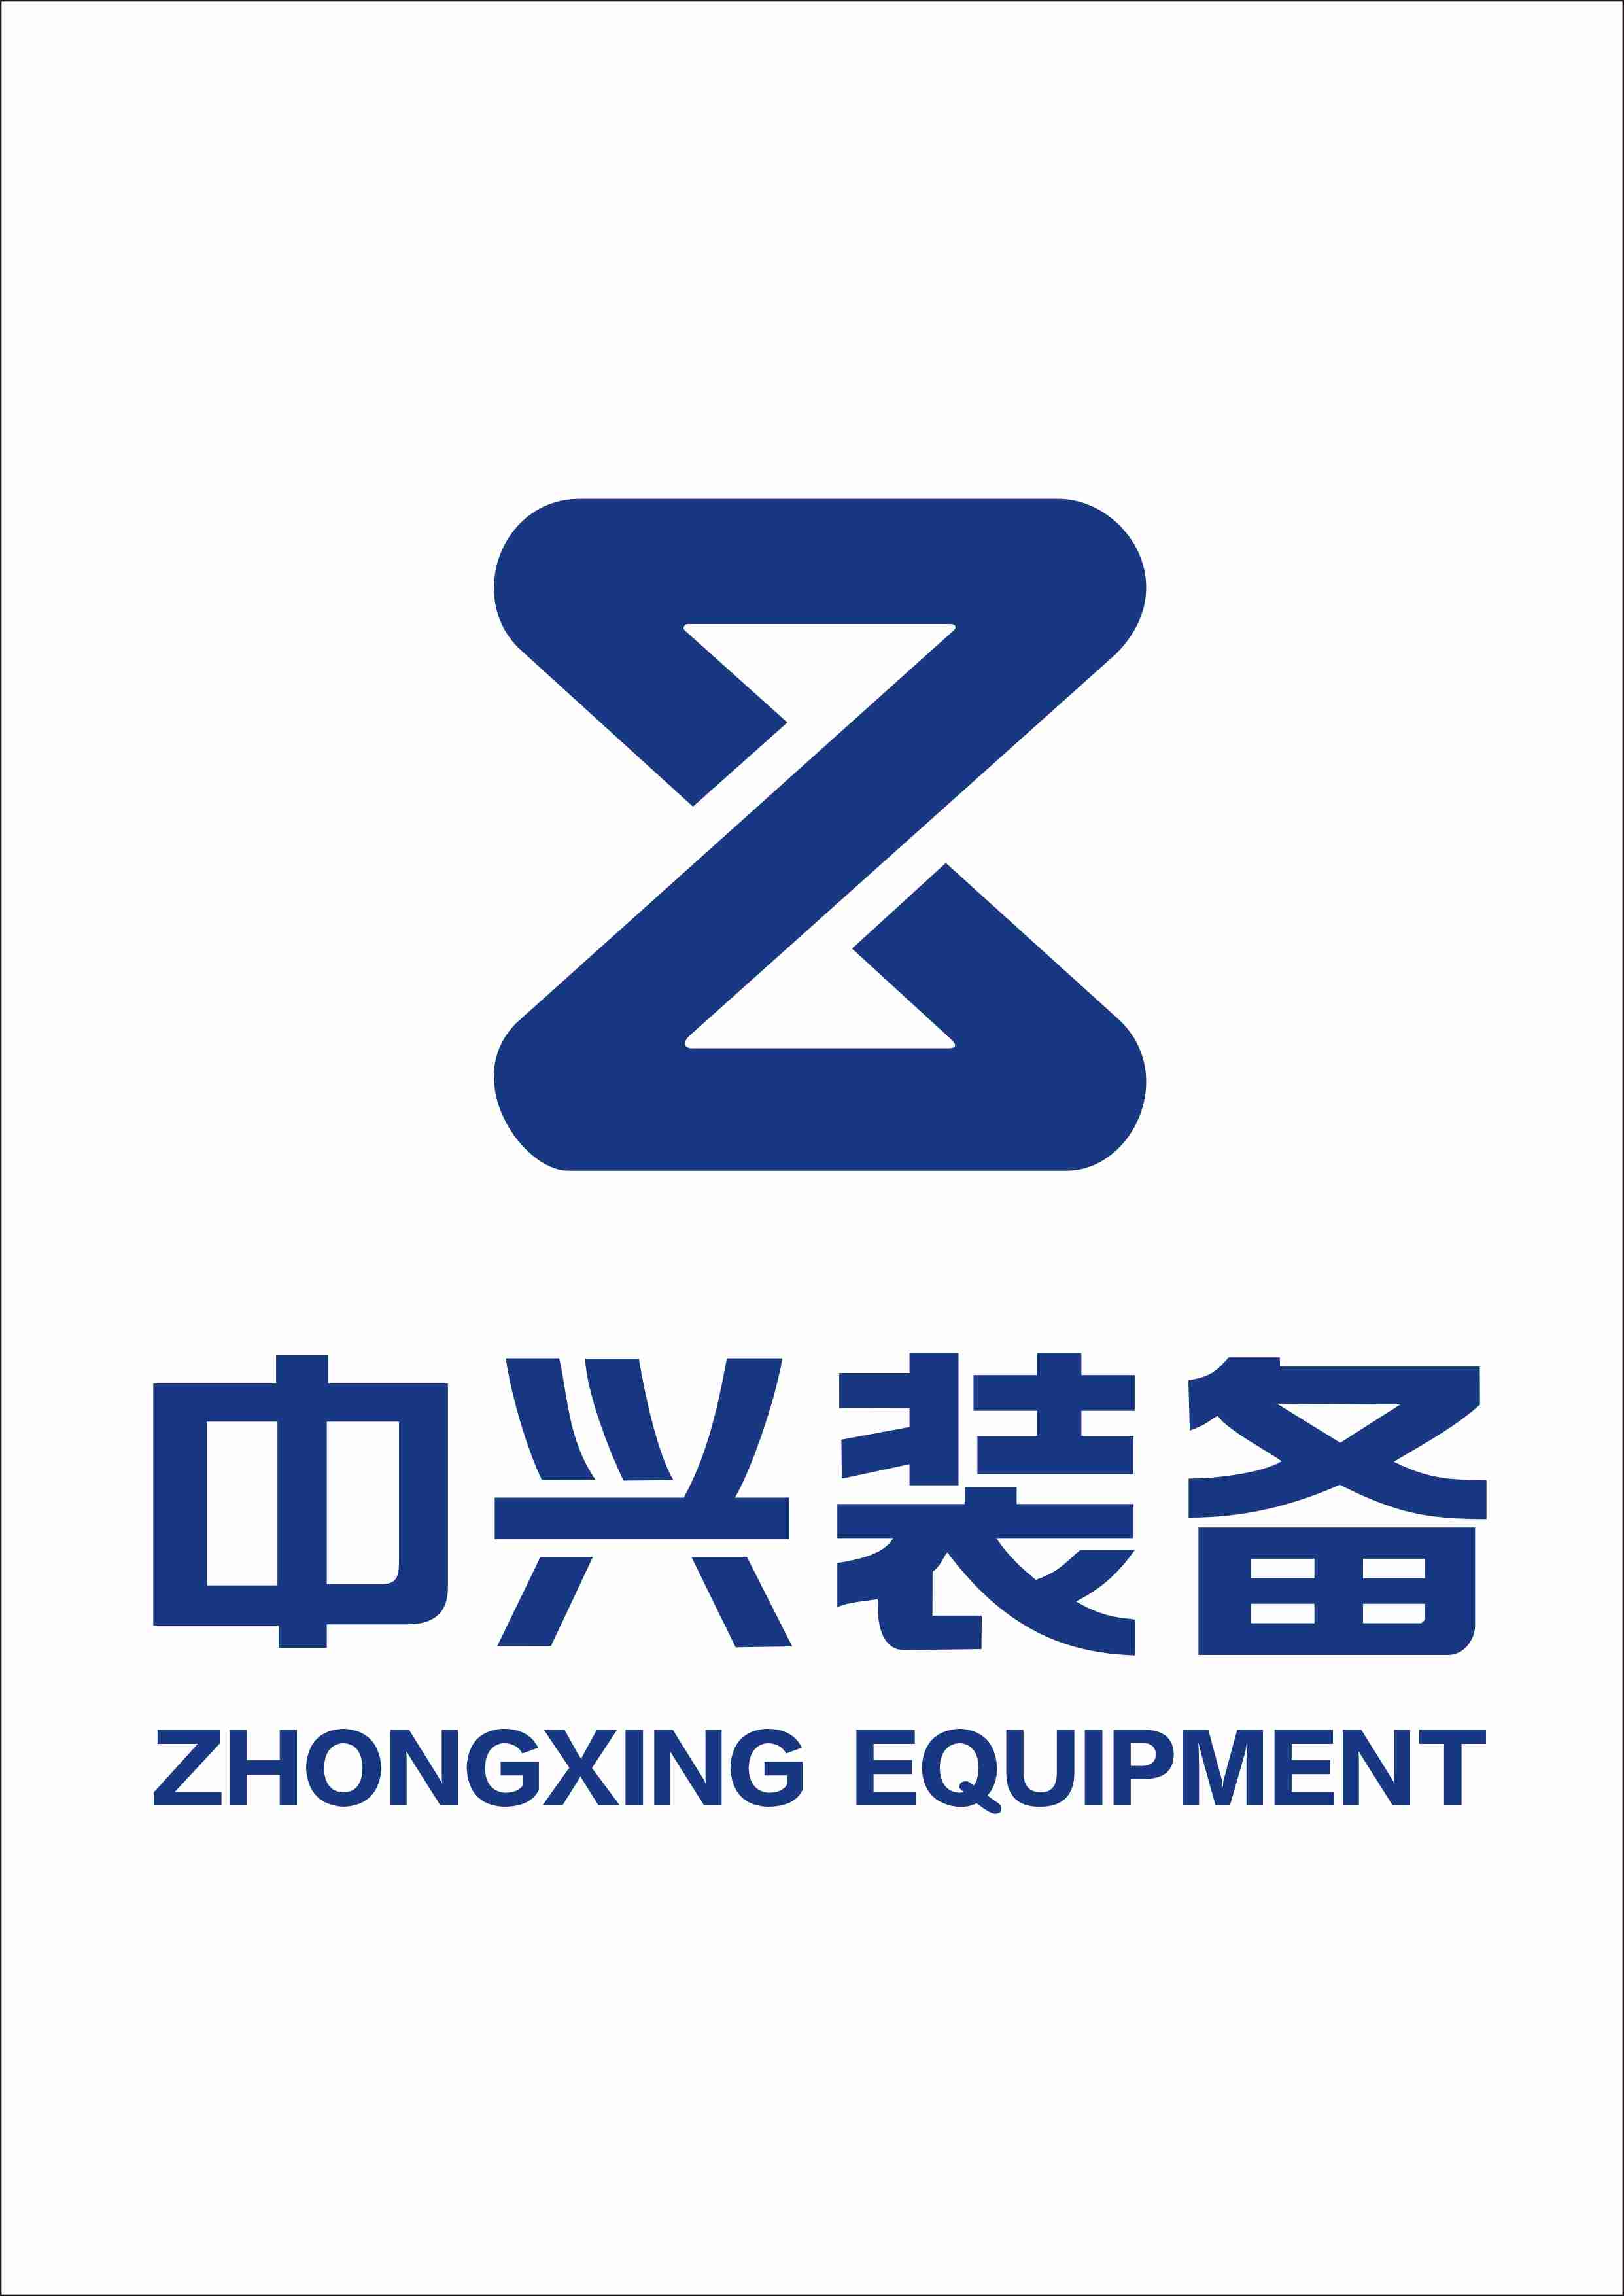 Company Profile - Zhongxing Energy Equipment Co., Ltd